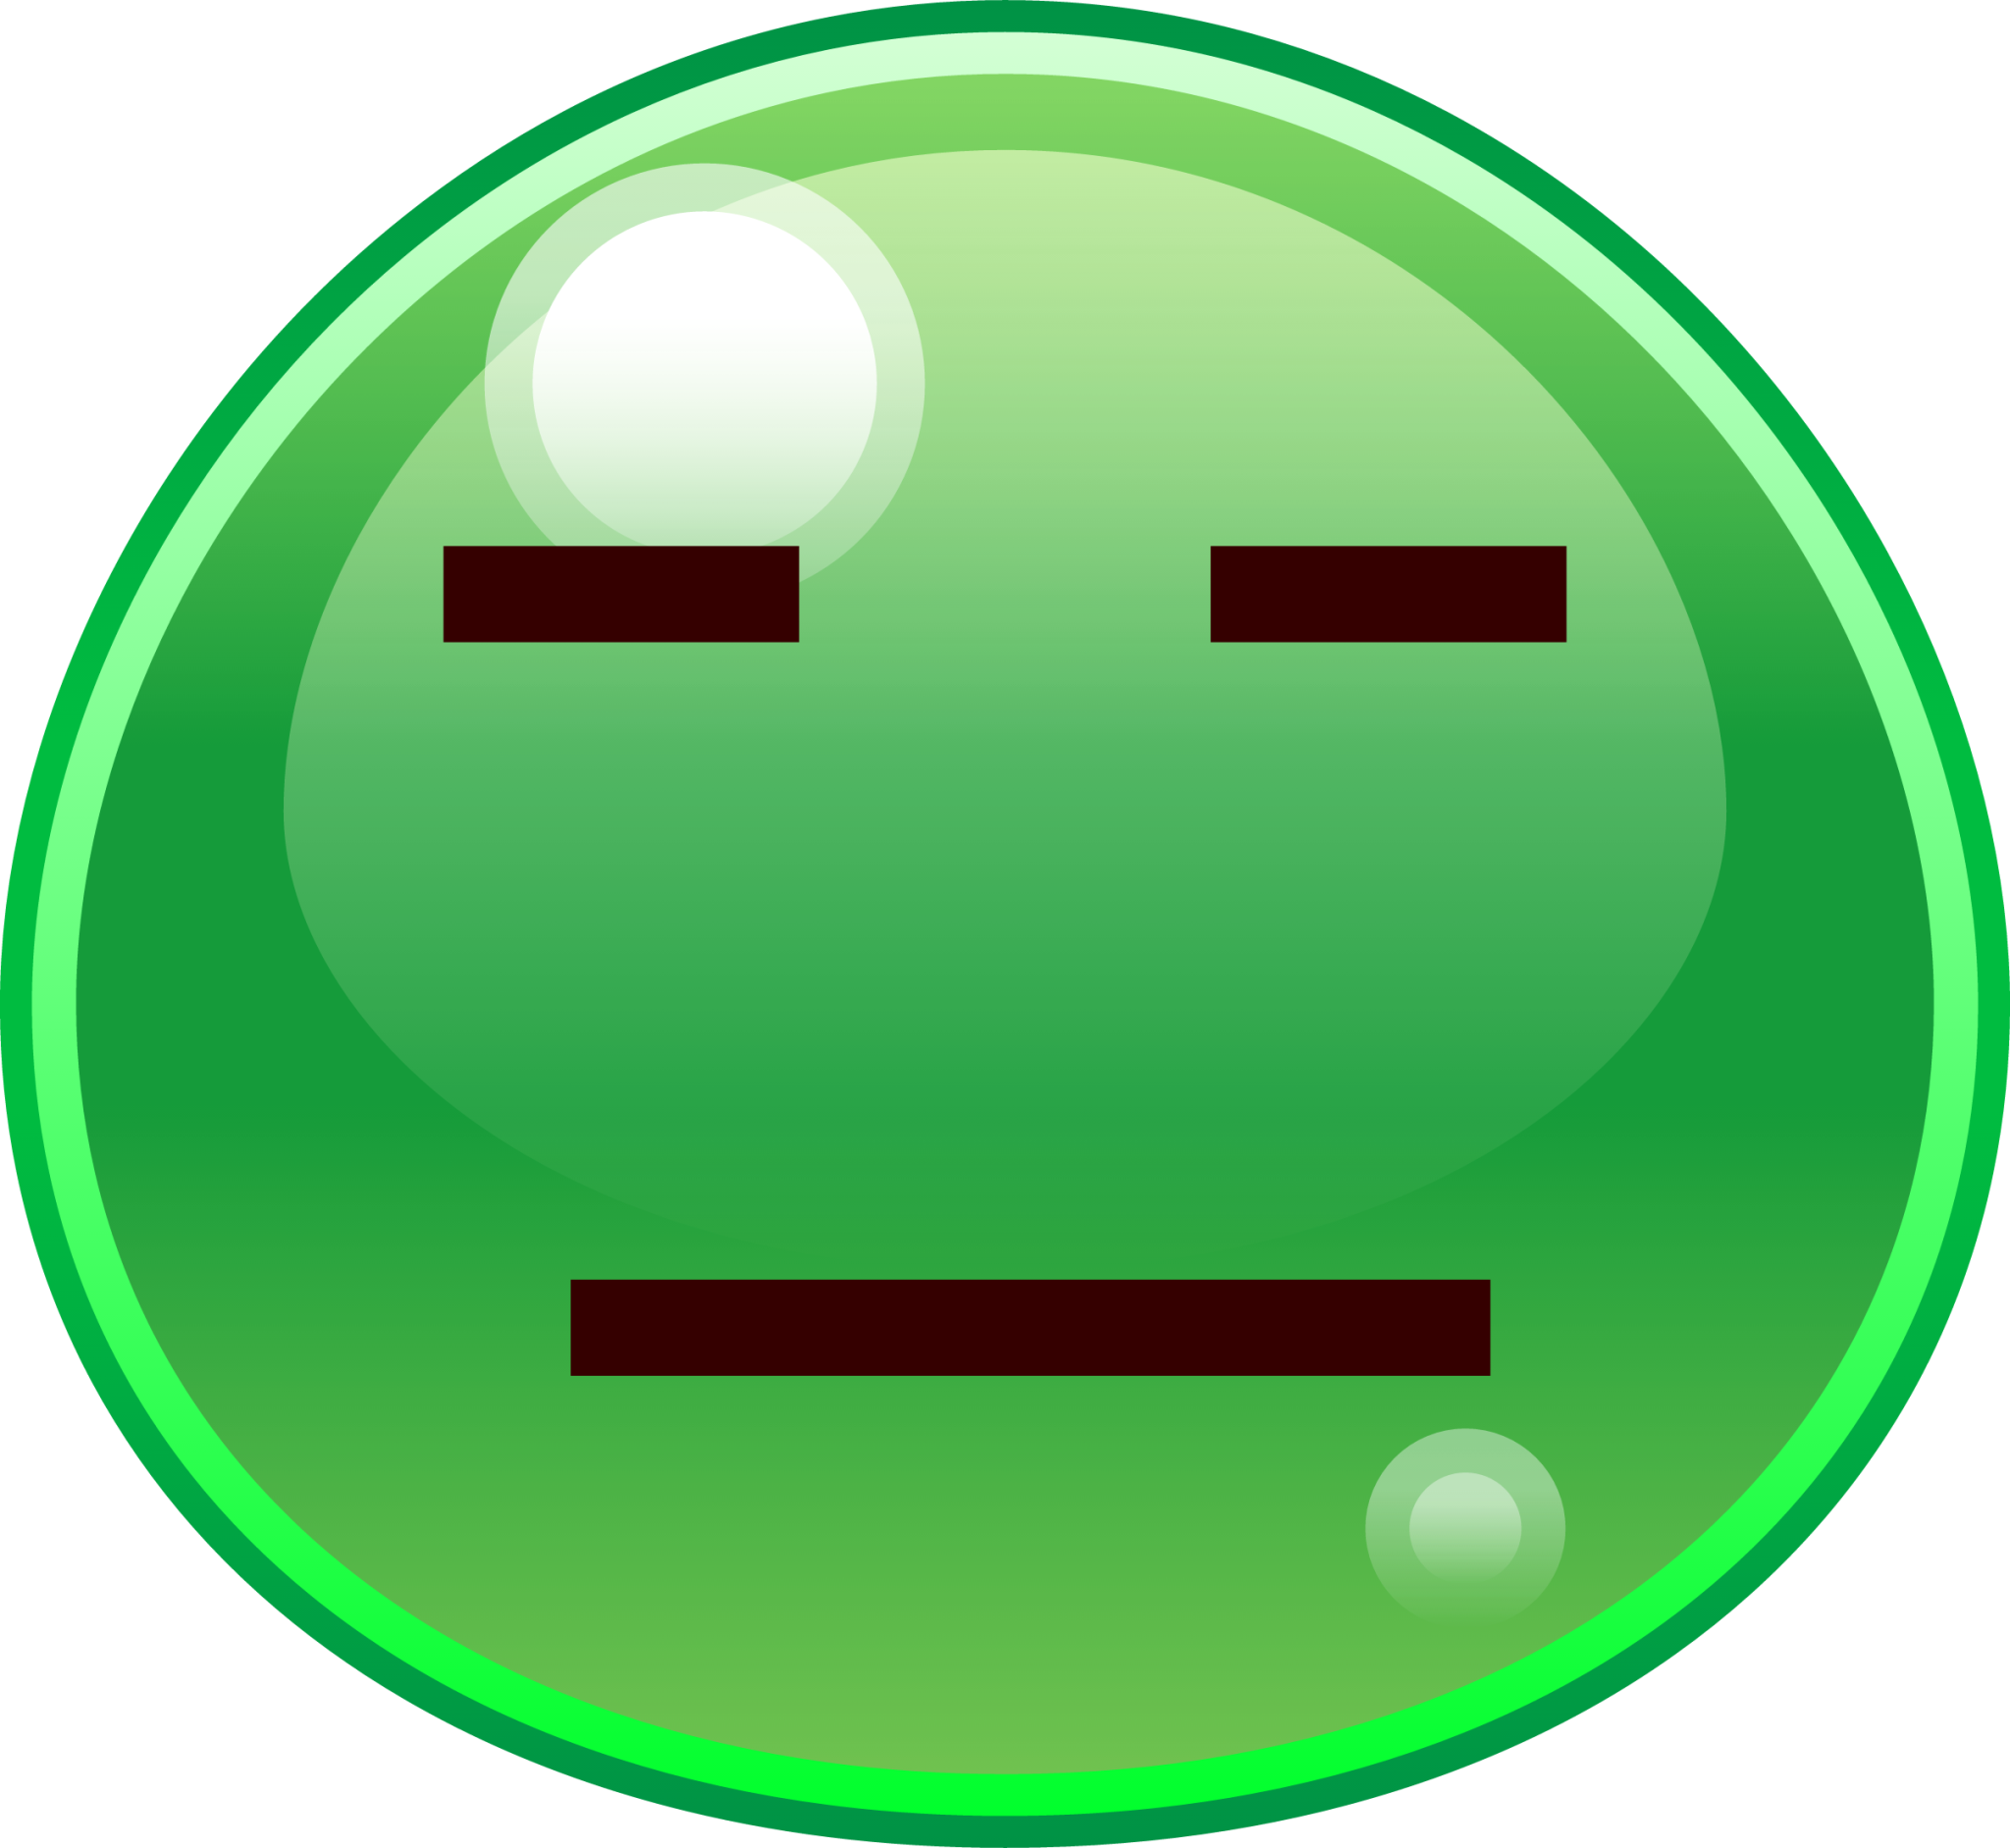 expressionless (slime) emoji